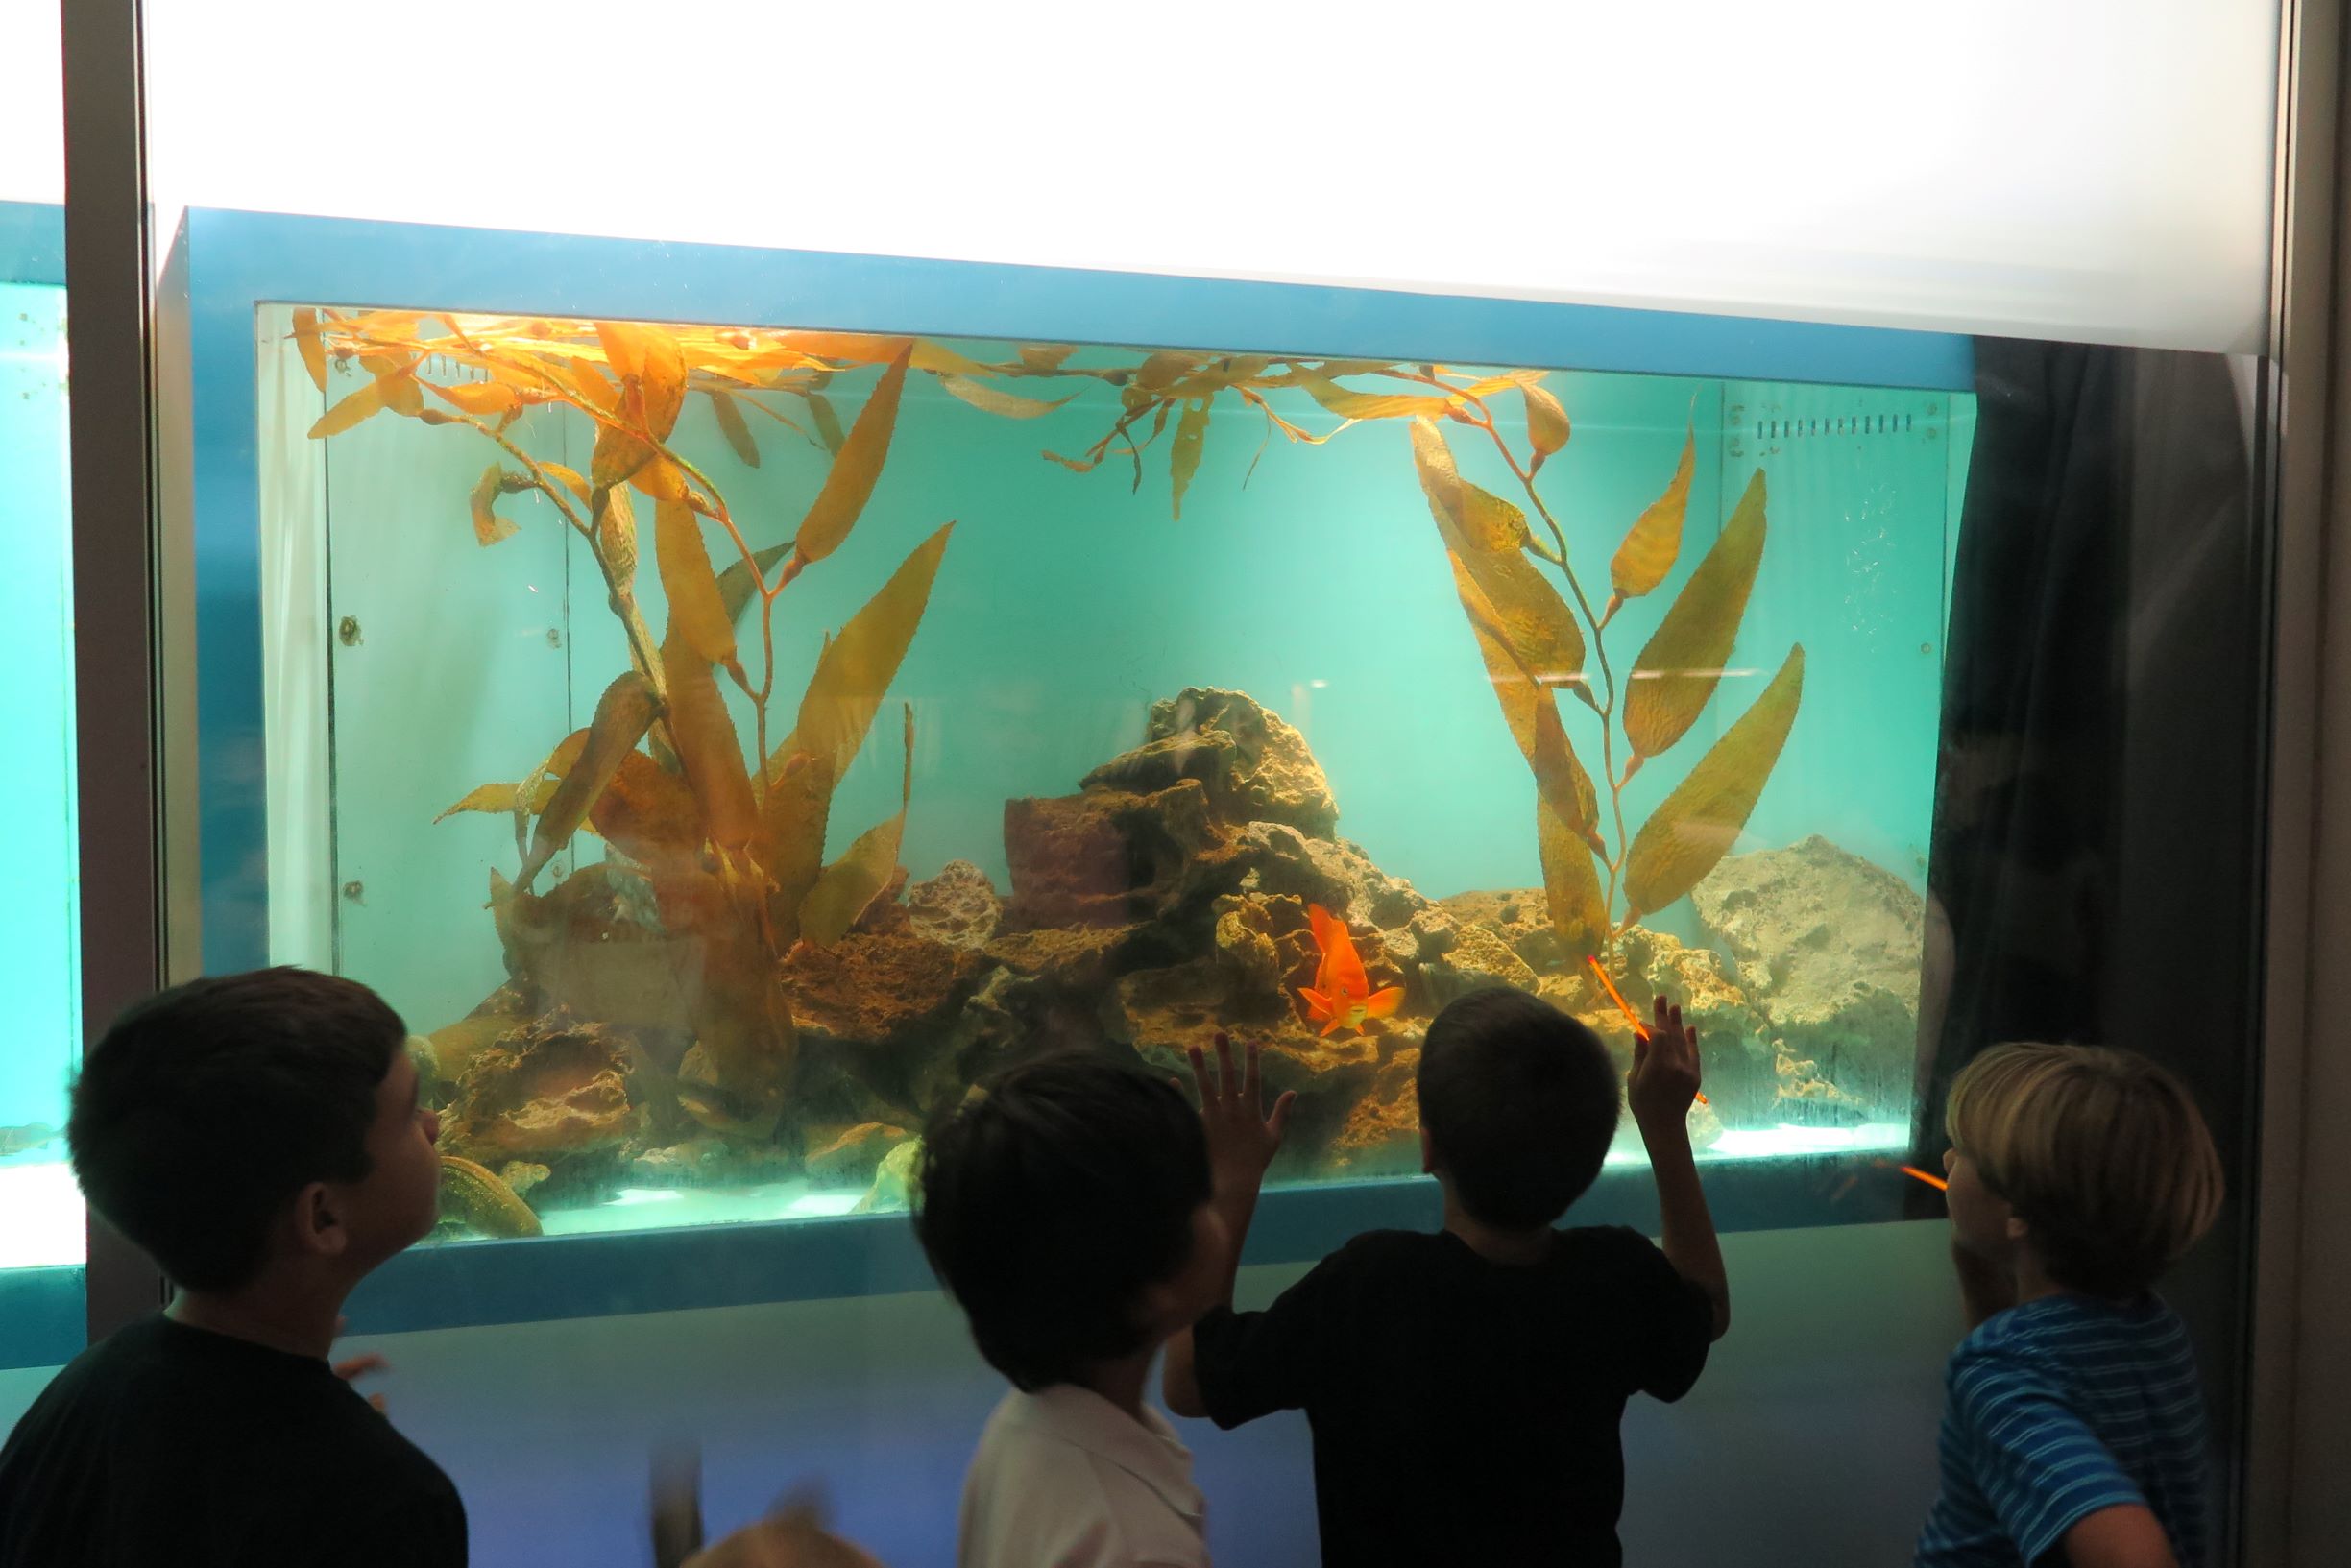 Children looking at an aquarium